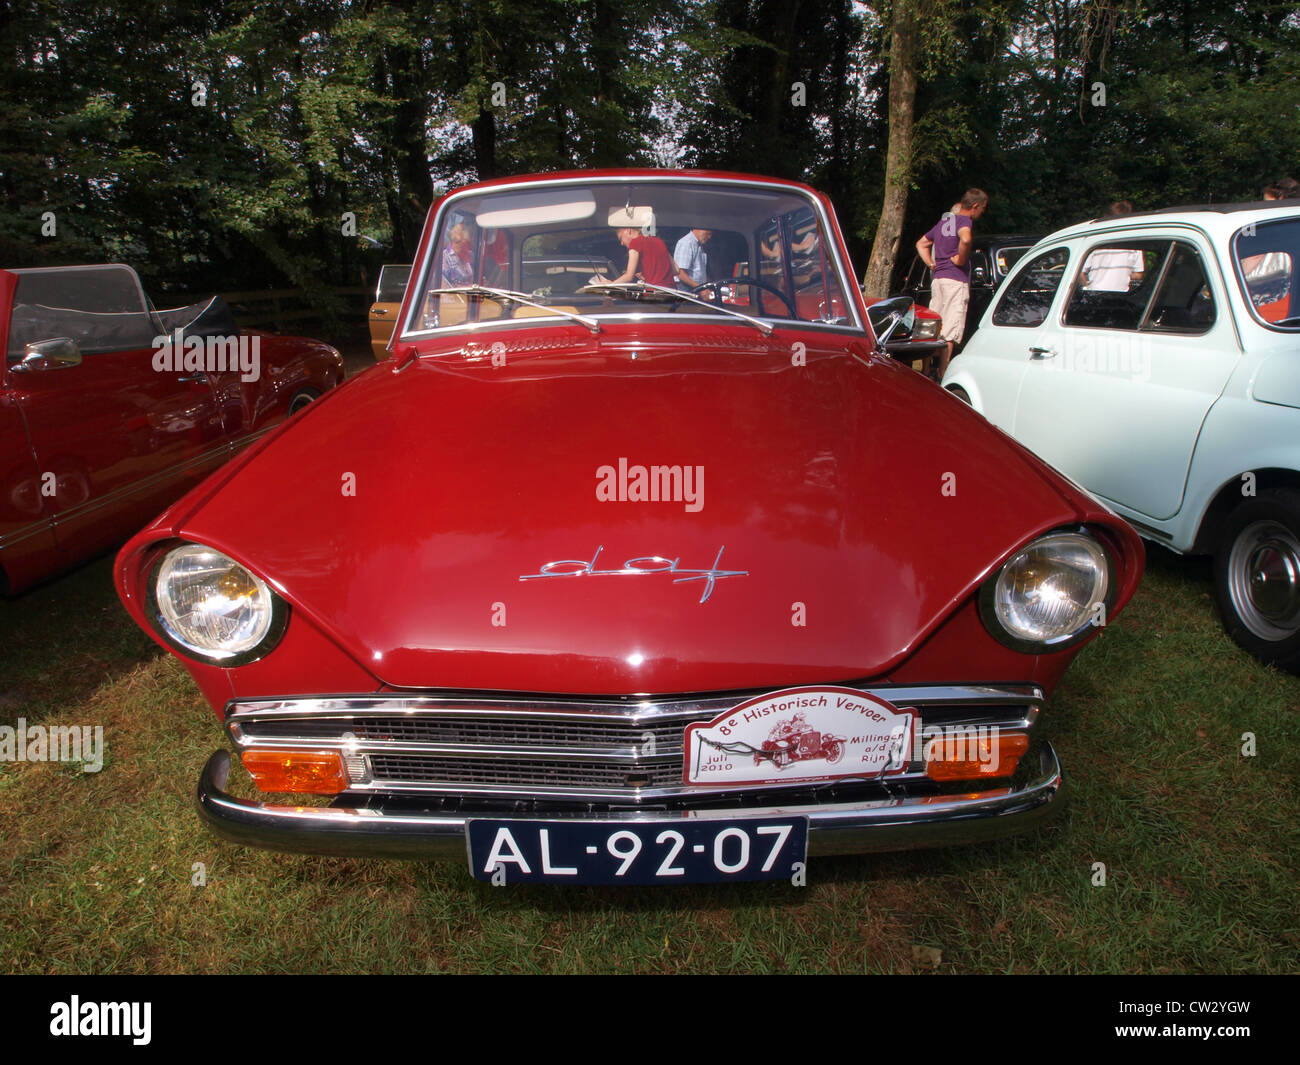 Daf car -Fotos und -Bildmaterial in hoher Auflösung – Alamy